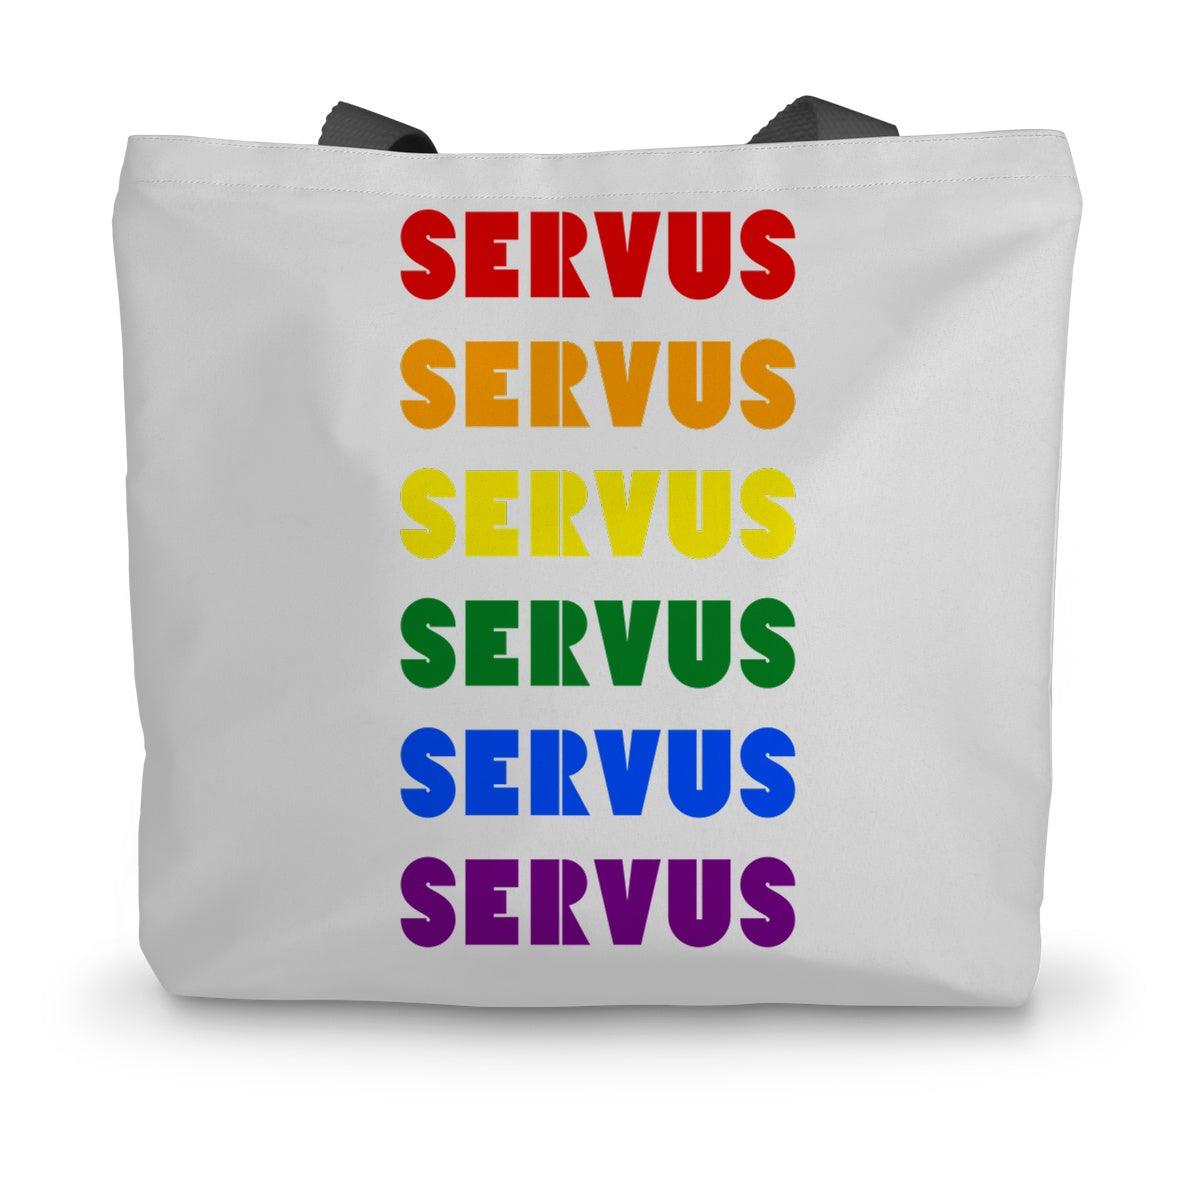 Bavarian Statement Tote Bag, Canvas with Rainbow / LGBT print "Servus" - Natural White - Bavari Shop - Bavarian Outfits, Dirndl, Lederhosen & Accessories